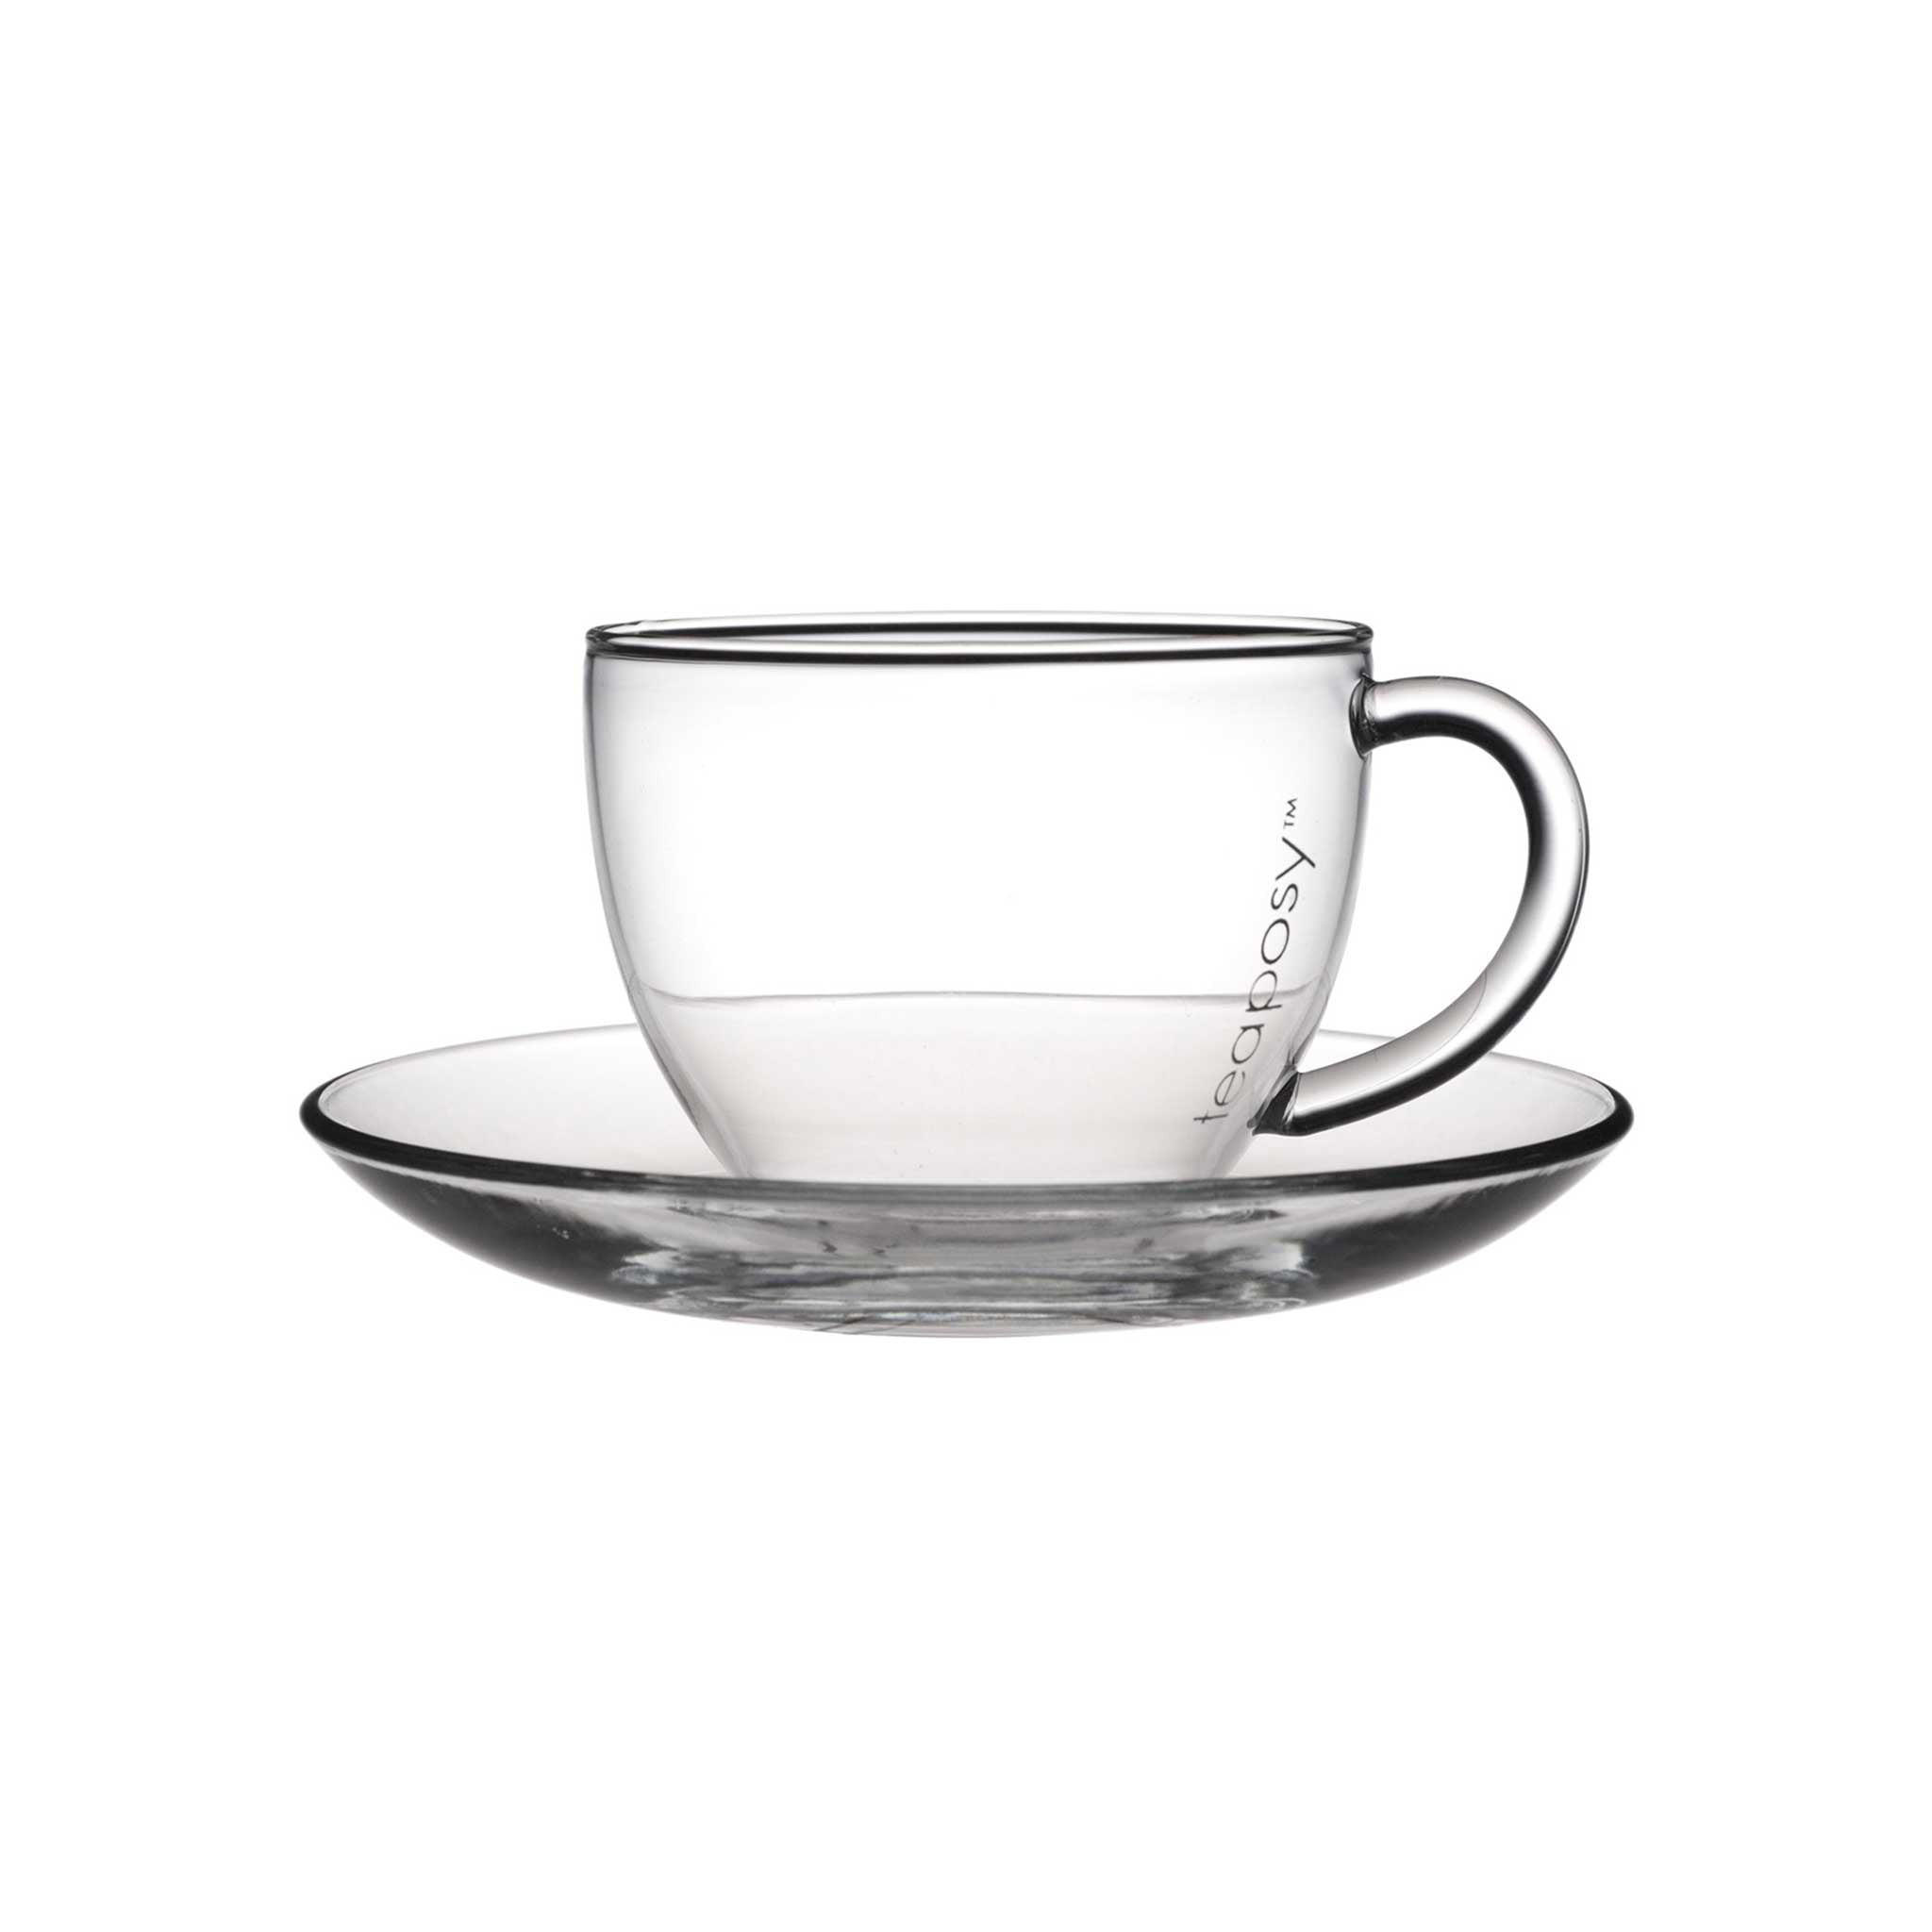 https://cdn.shopify.com/s/files/1/2181/6887/products/GL336LP-tea-for-more-tea-cup-saucer_2048x.jpg?v=1587245076